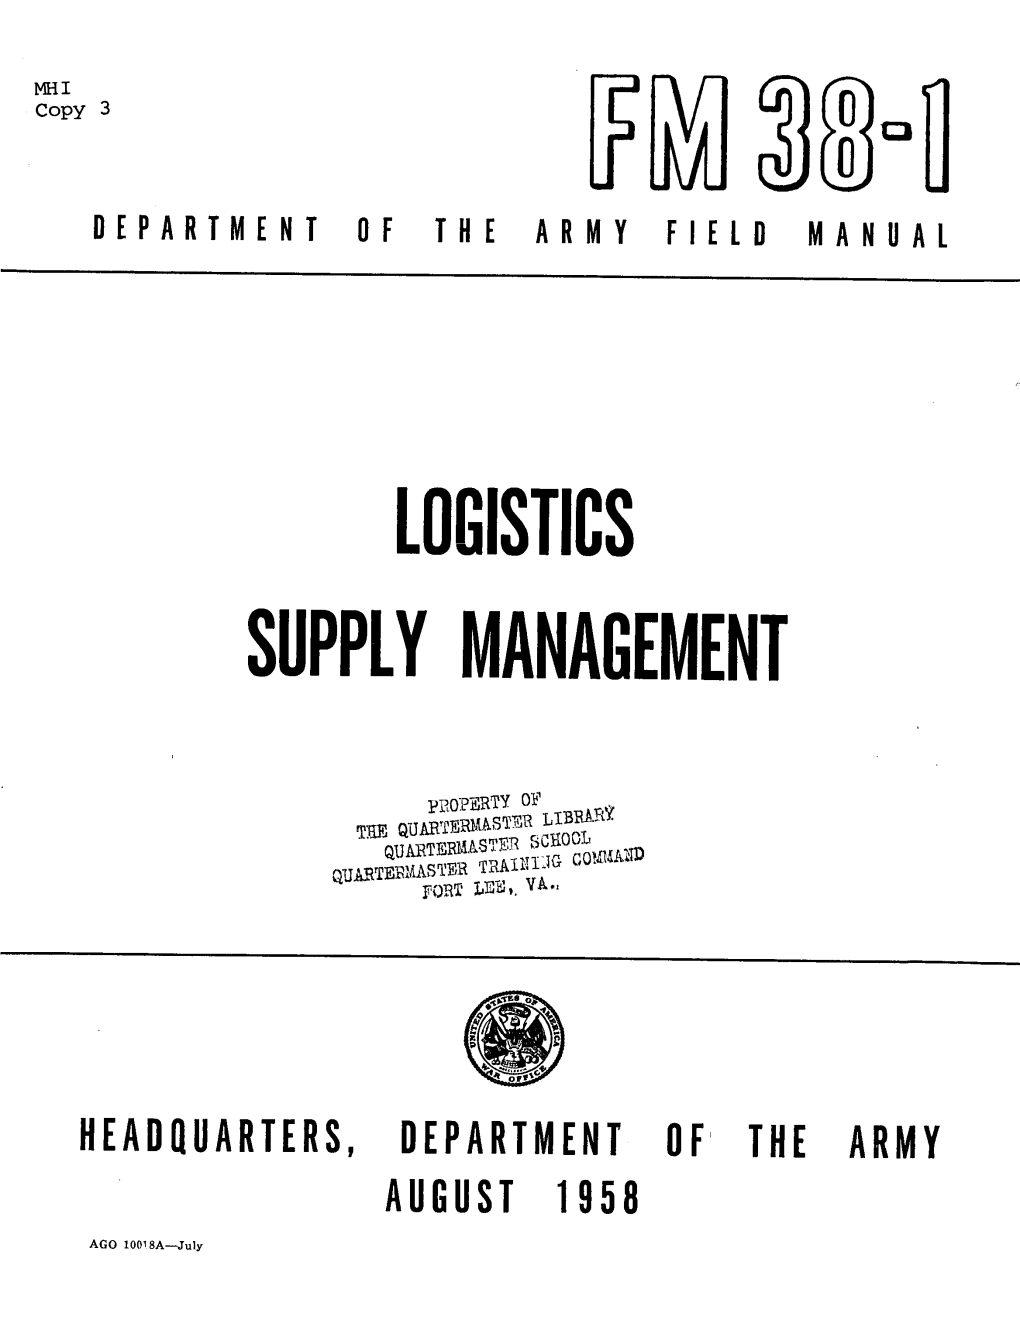 Logistics Supply Management